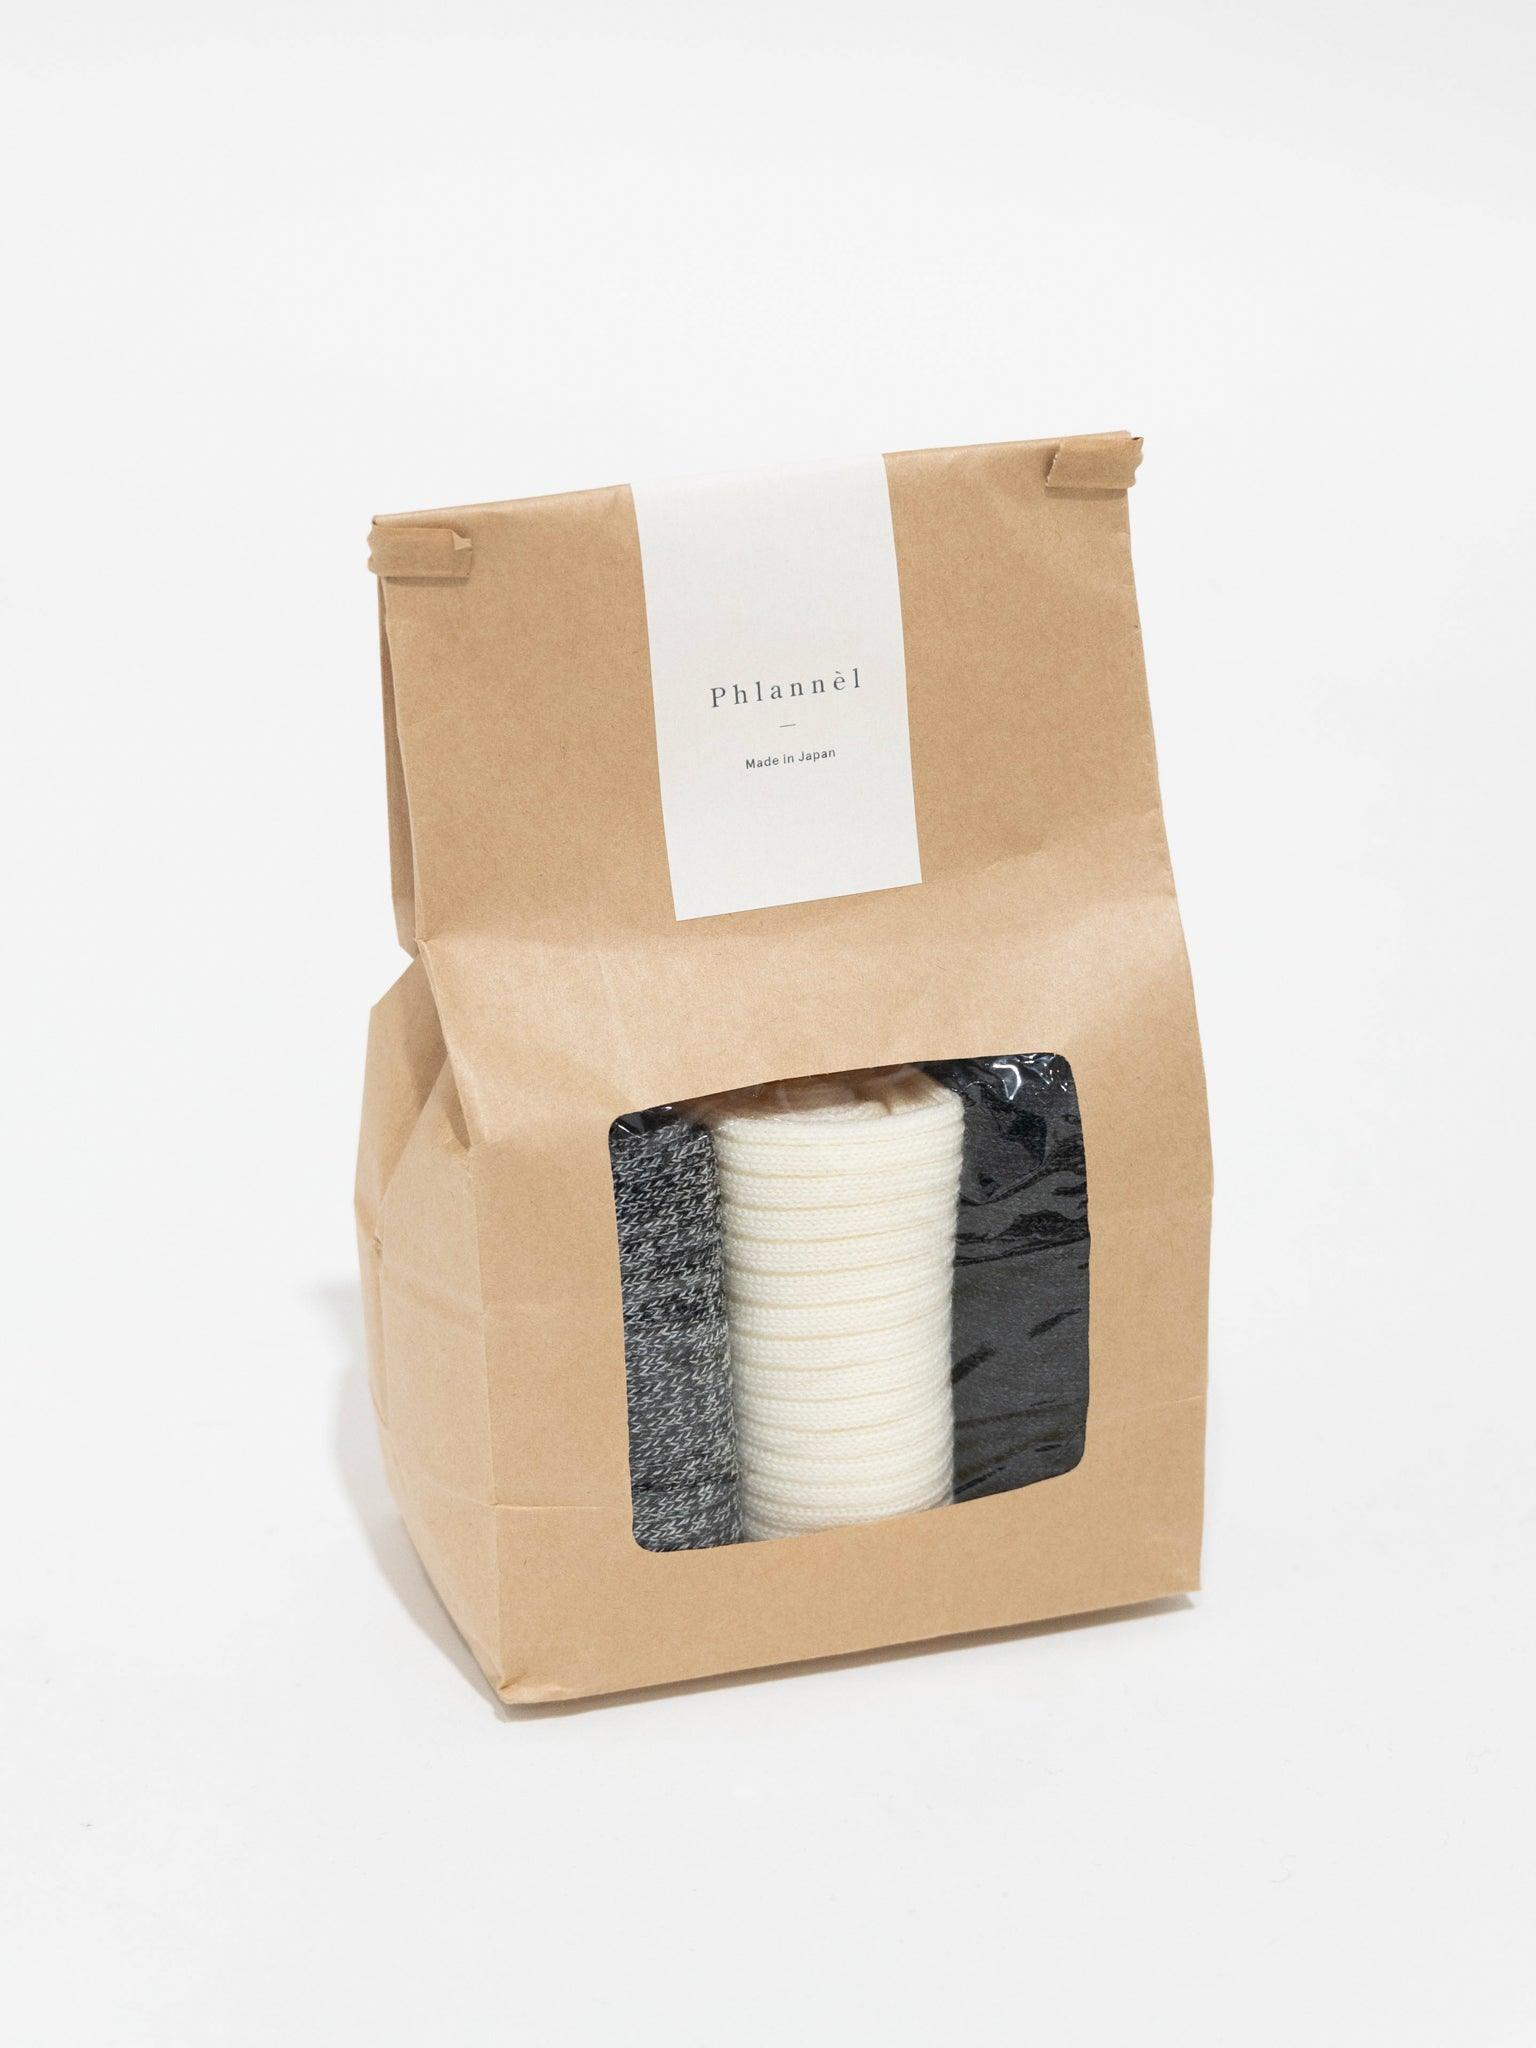 Namu Shop - Phlannel Three Pack Wool Socks (Men’s)